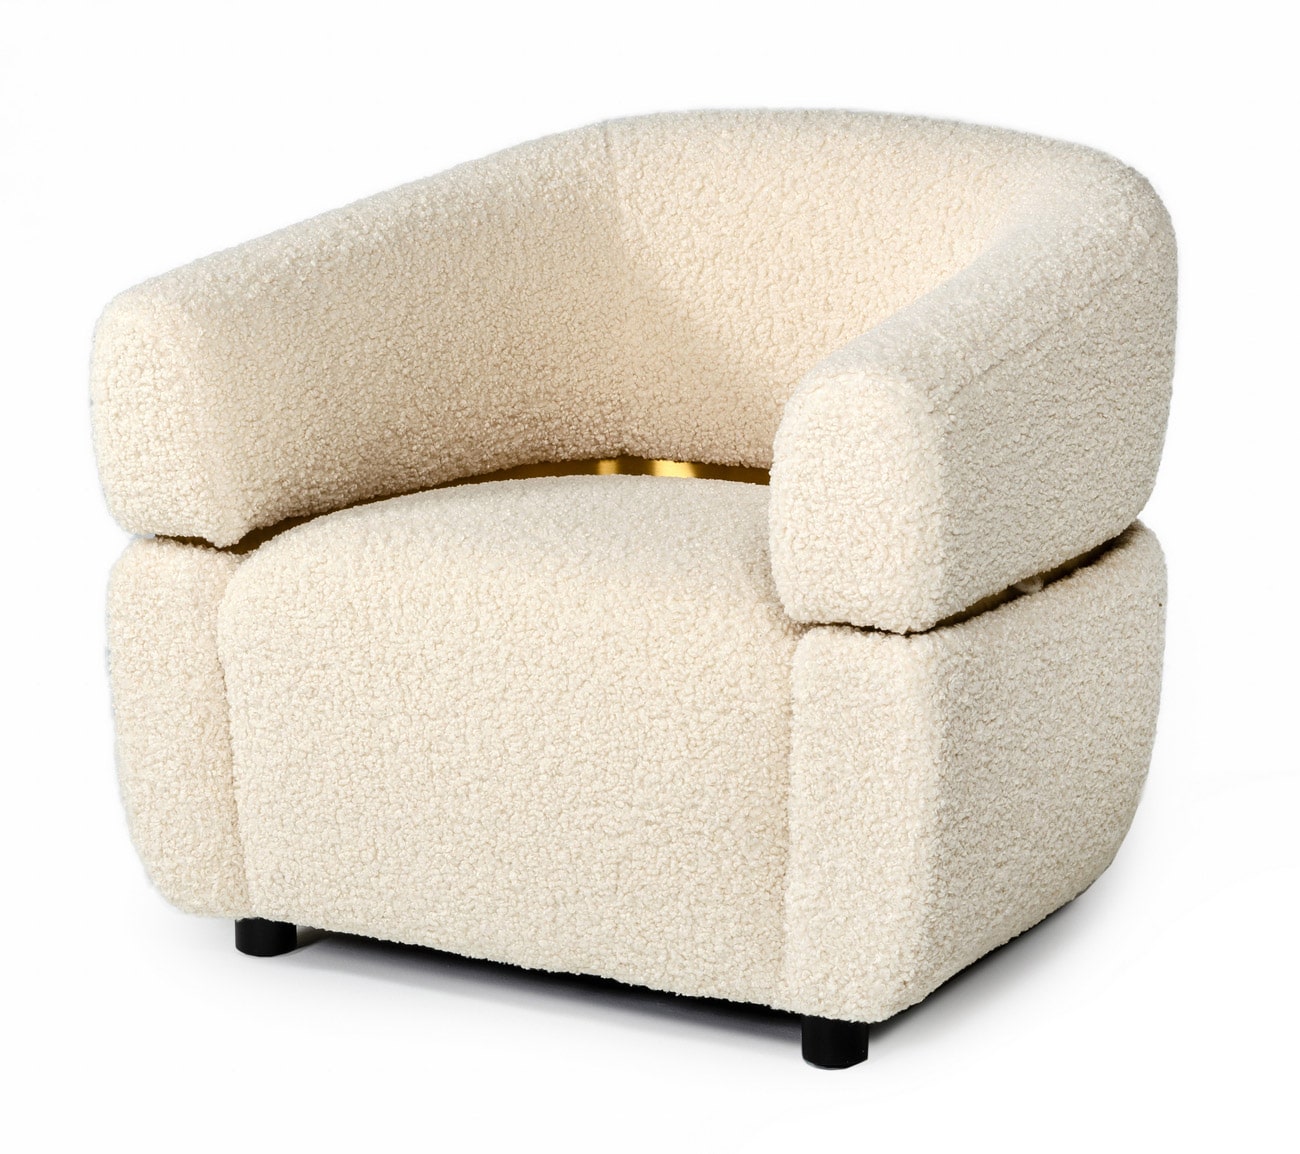 Divani Casa Gannet - Glam Beige Fabric Chair-4